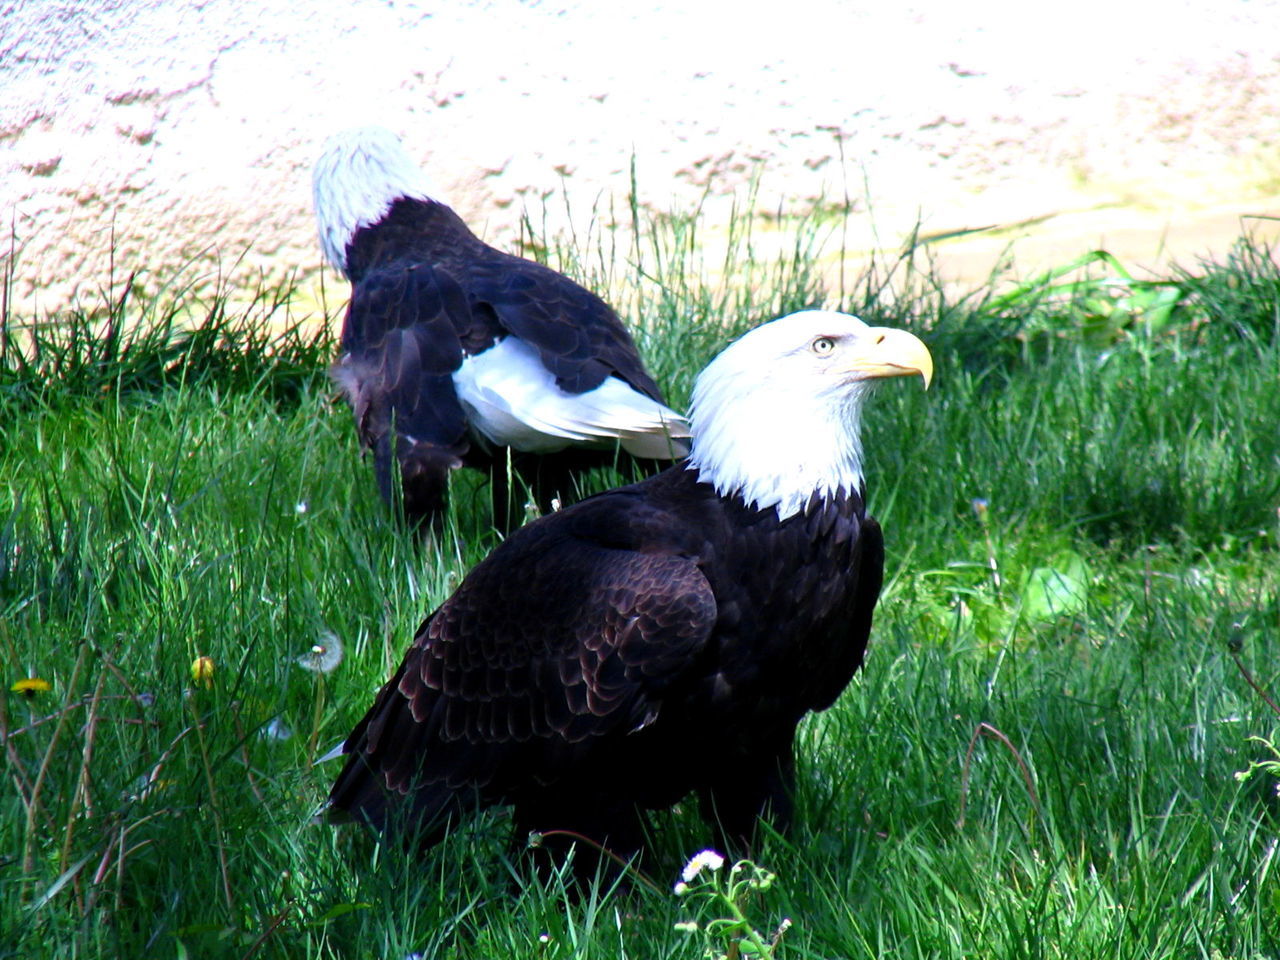 Bald eagles on grassy field